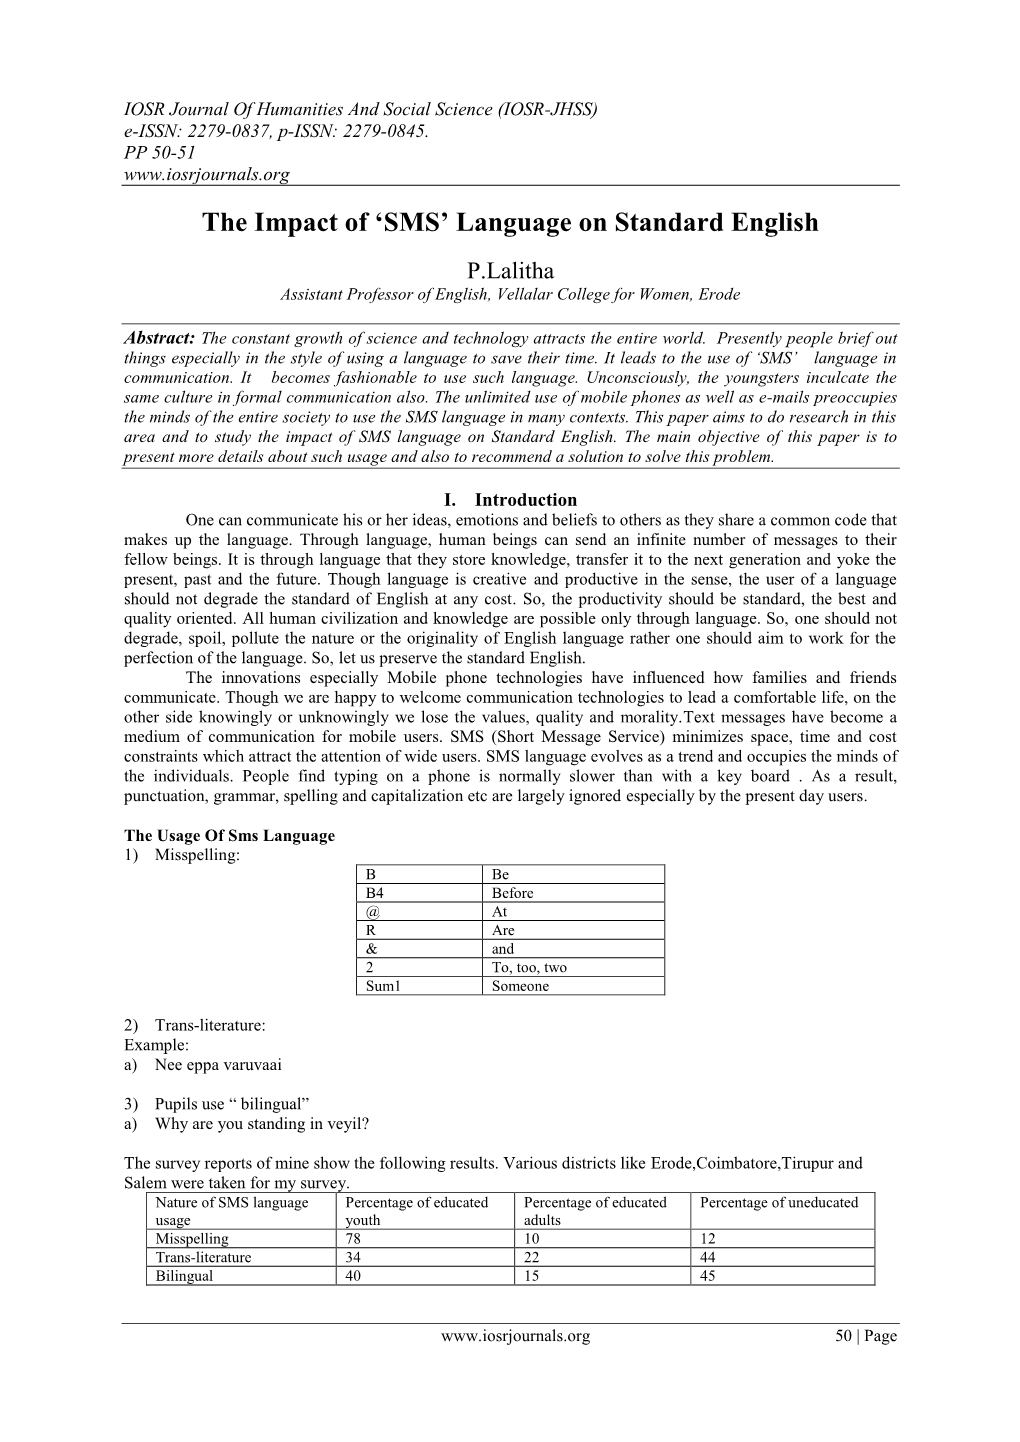 SMS’ Language on Standard English